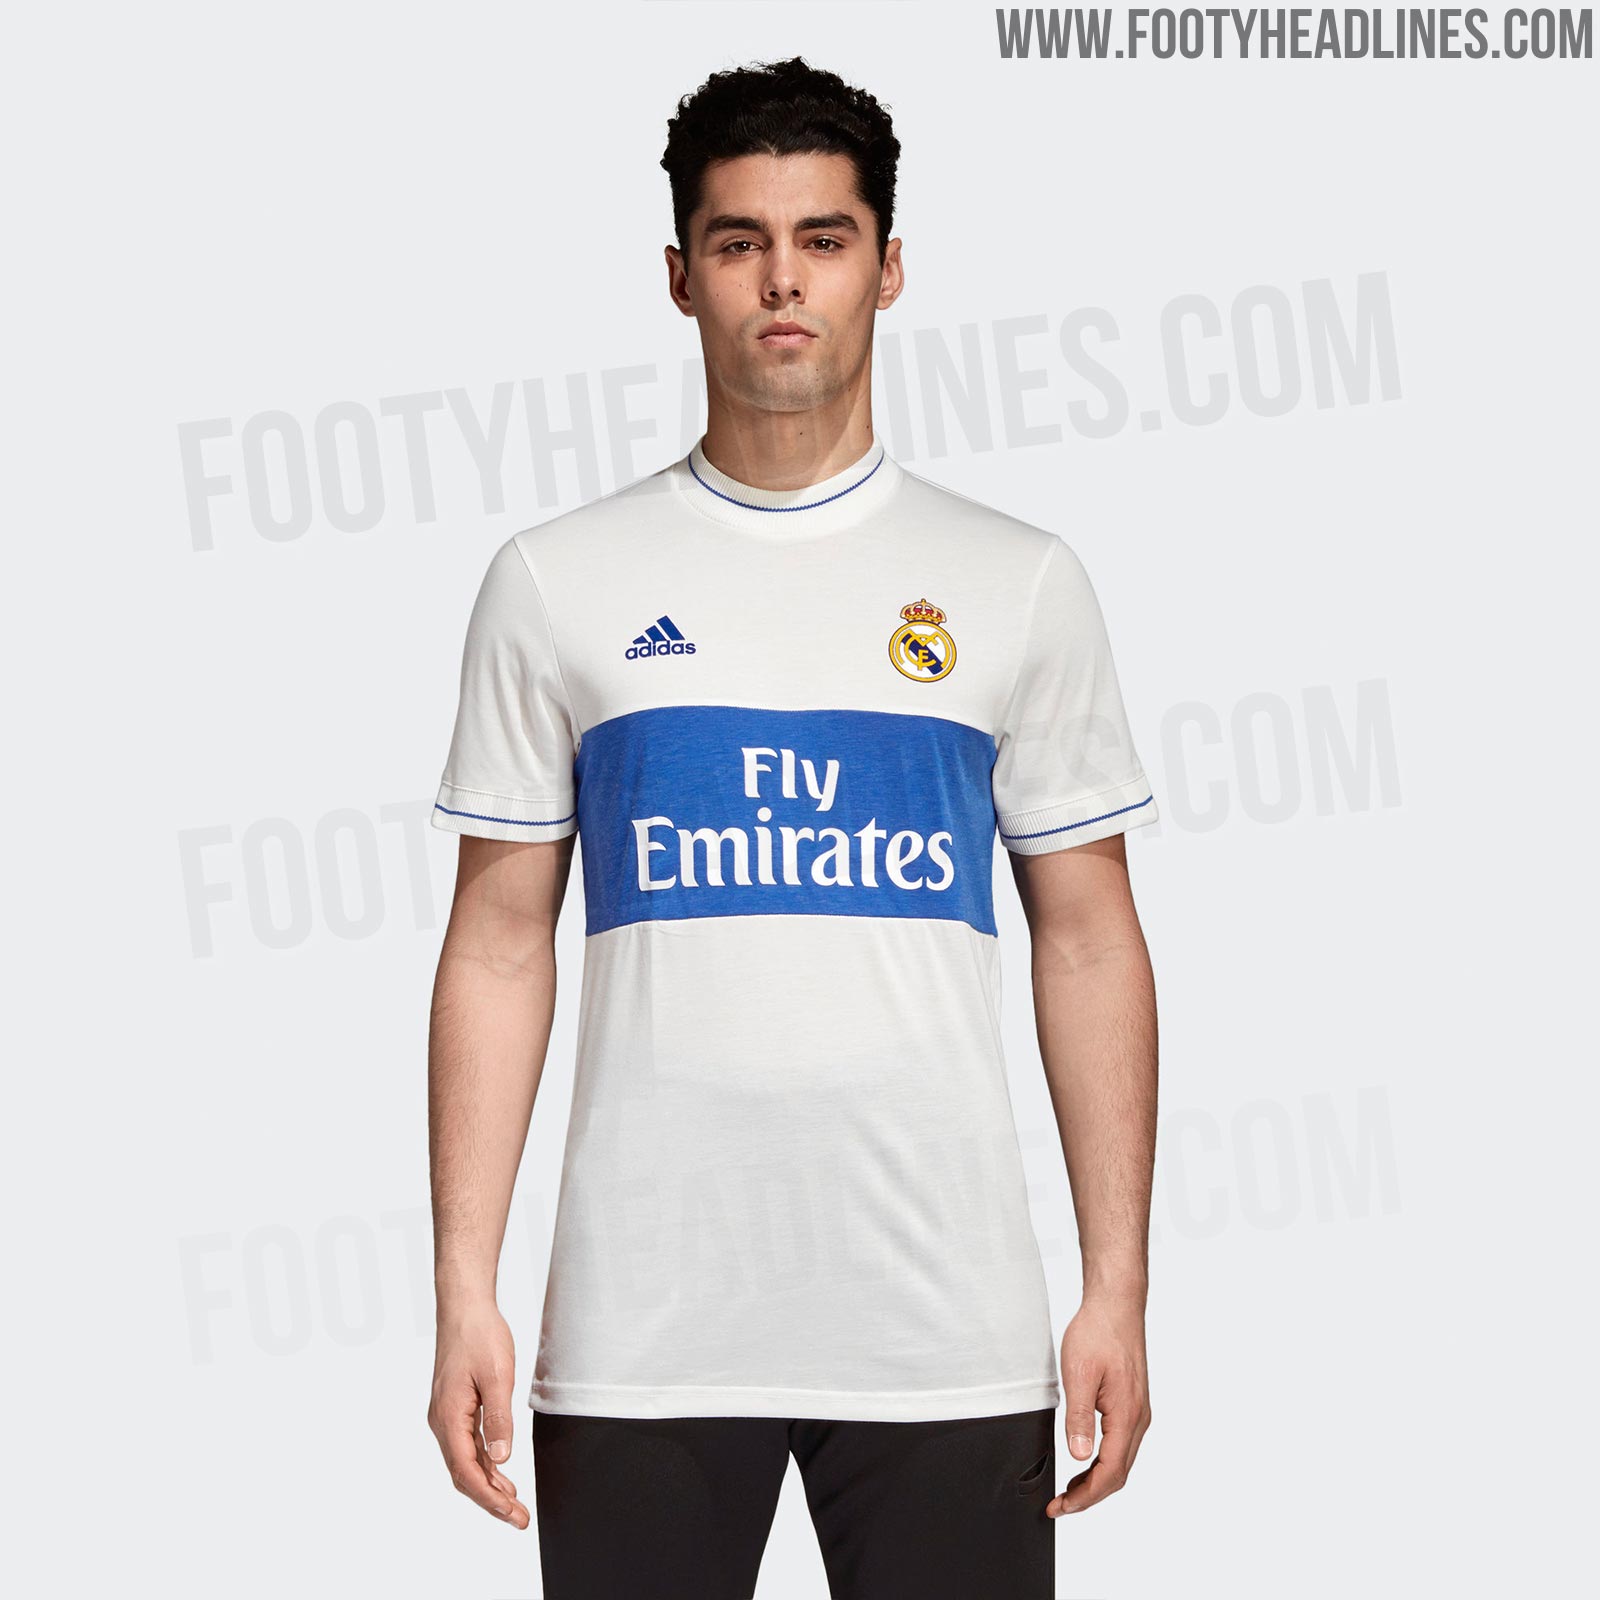 Real Madrid adidas Icons range on sale now